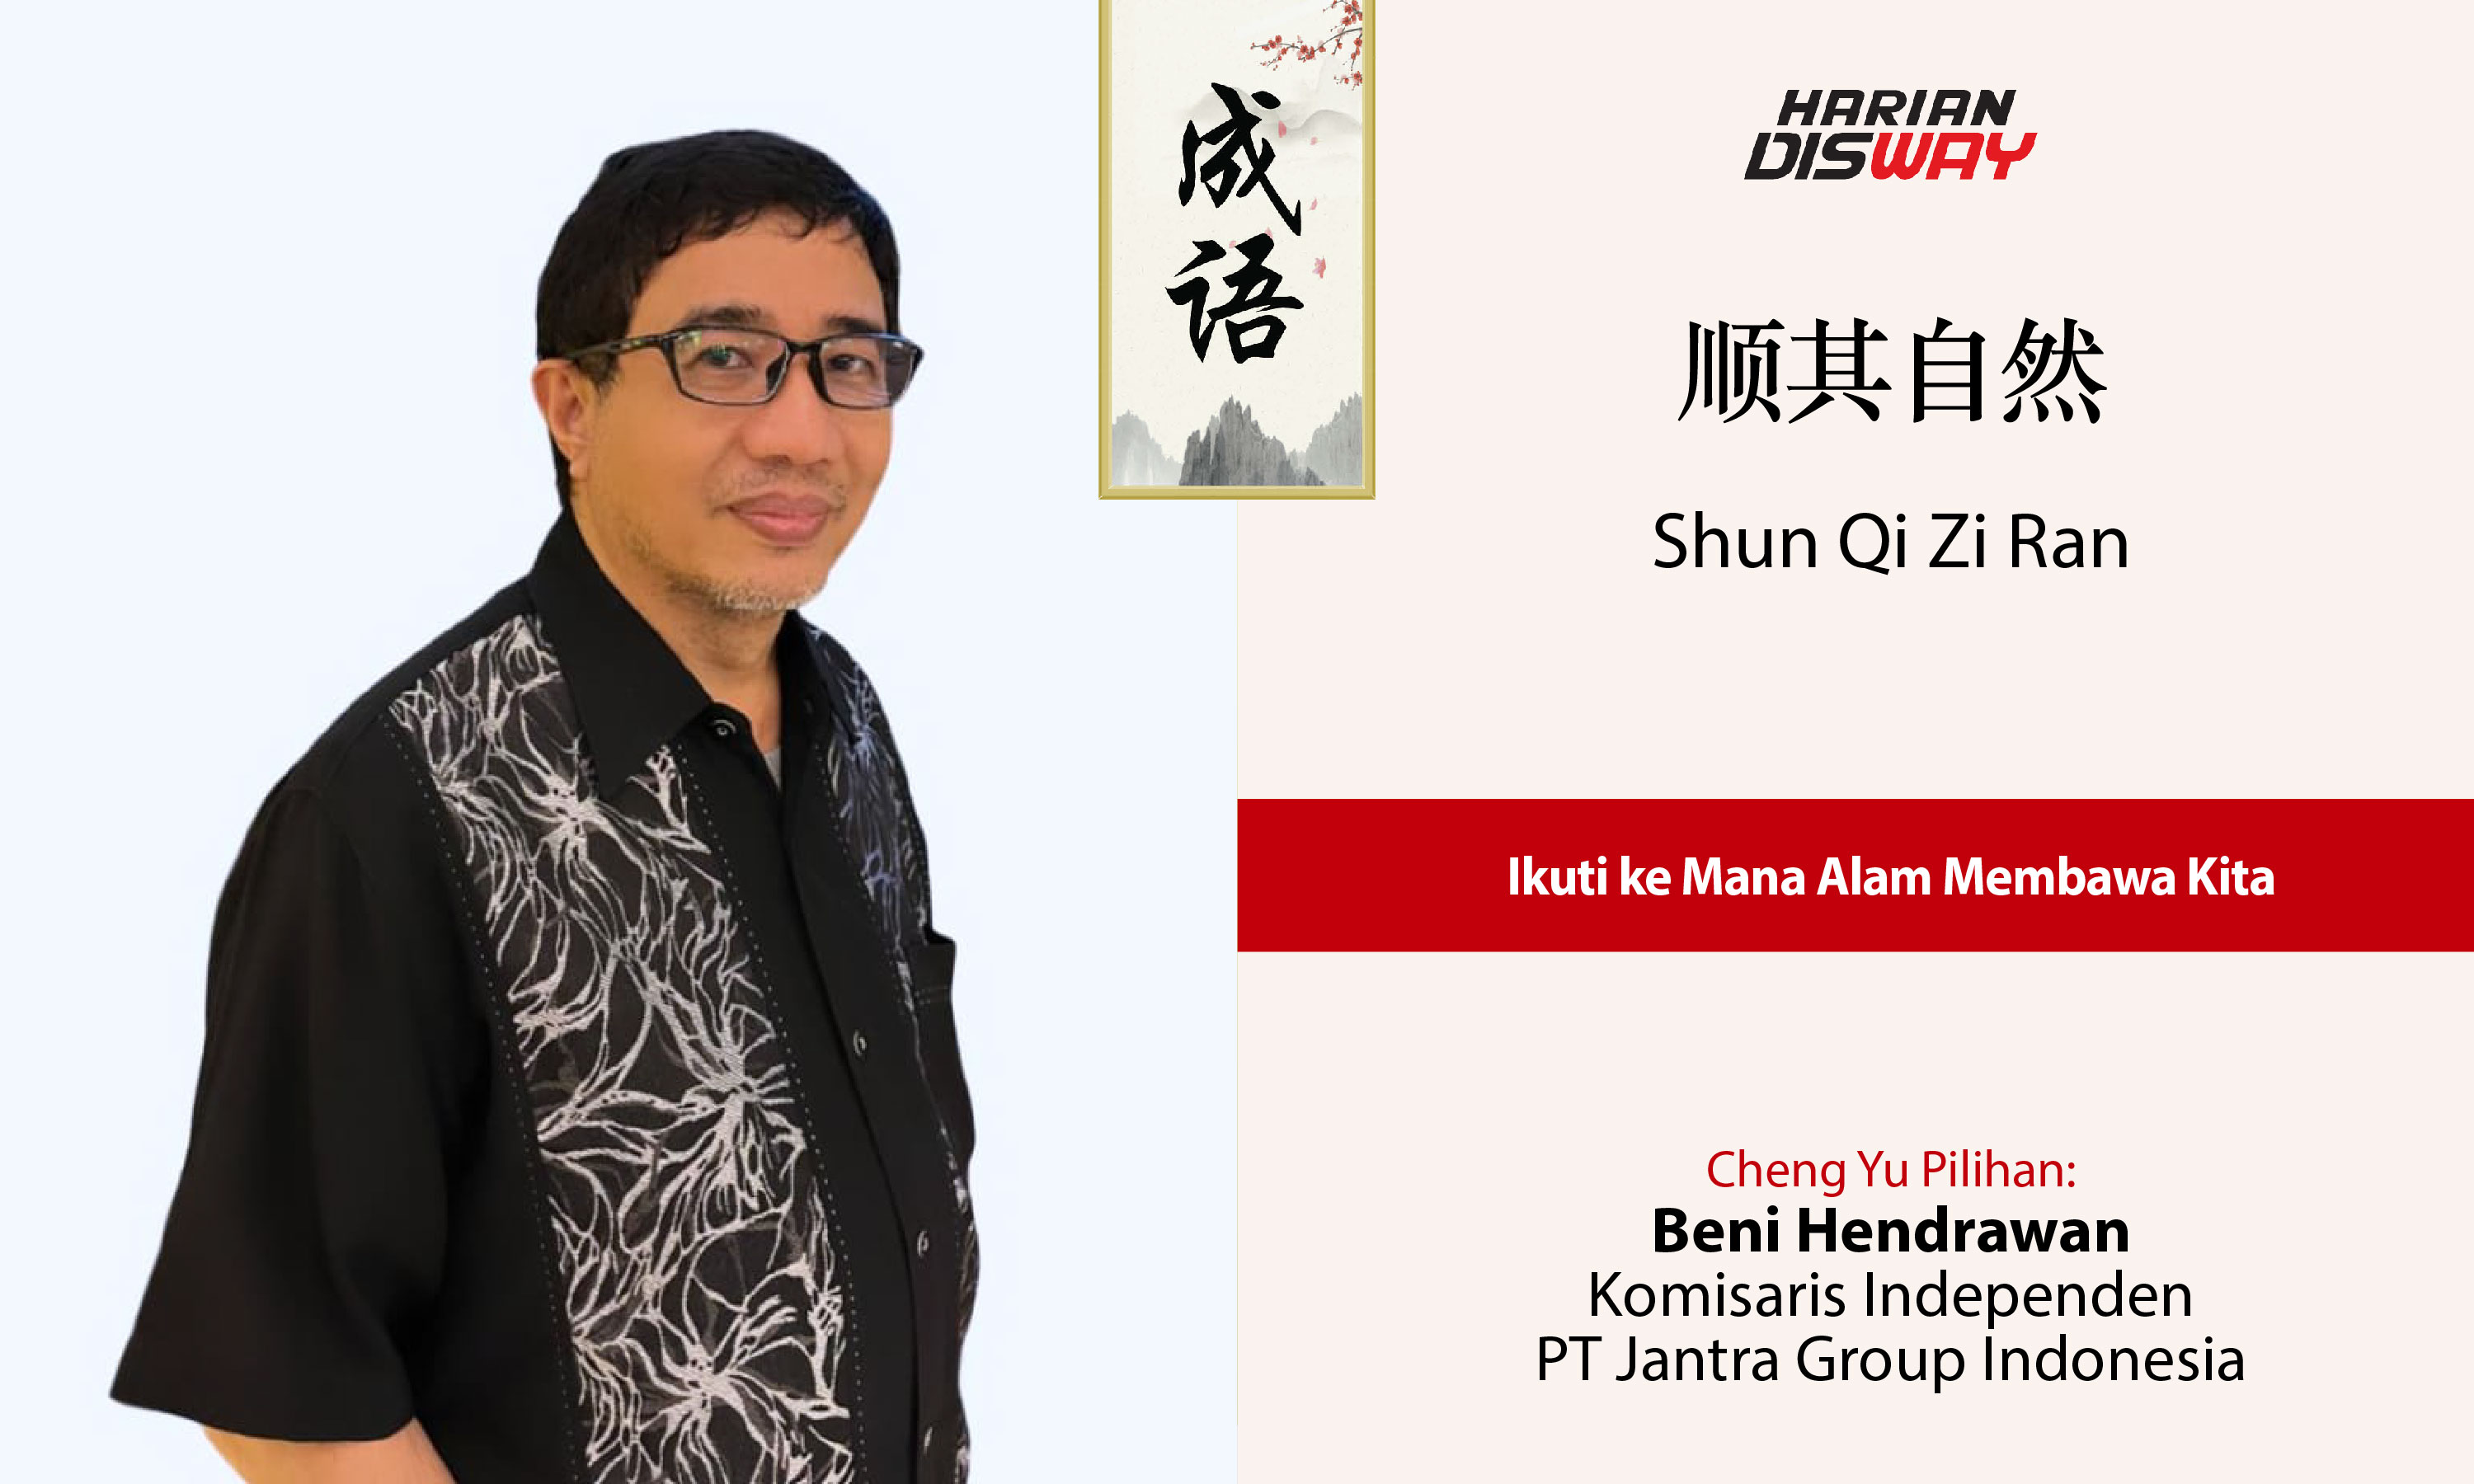 Cheng Yu Pilihan Komisaris Independen PT Jantra Group Indonesia Beni Hendrawan: Shun Qi Zi Ran